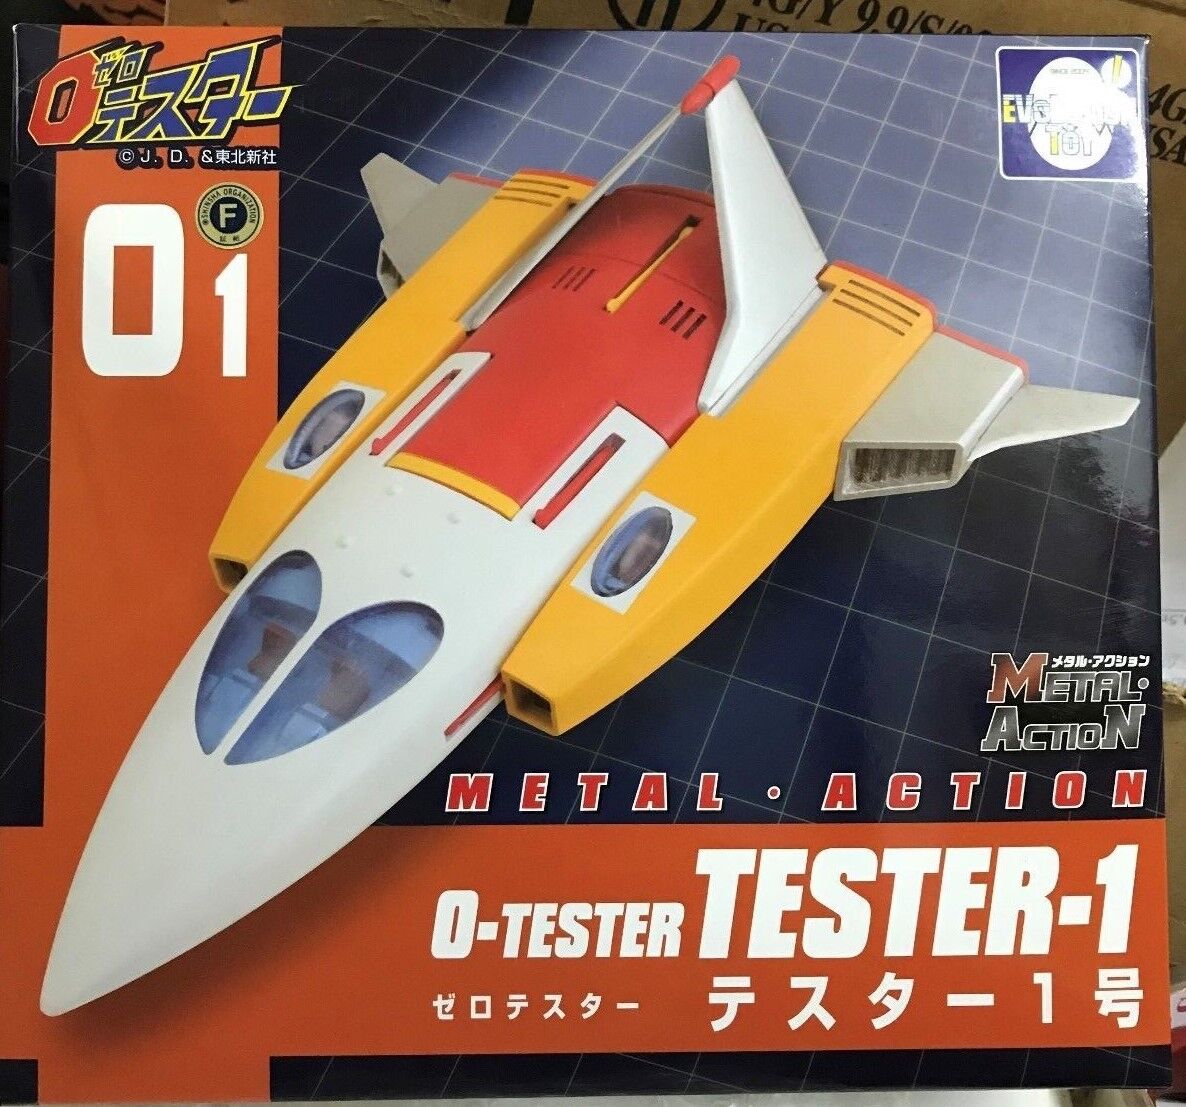 New Evolution Toy Metal Action no.1 Zero Tester Tester 1